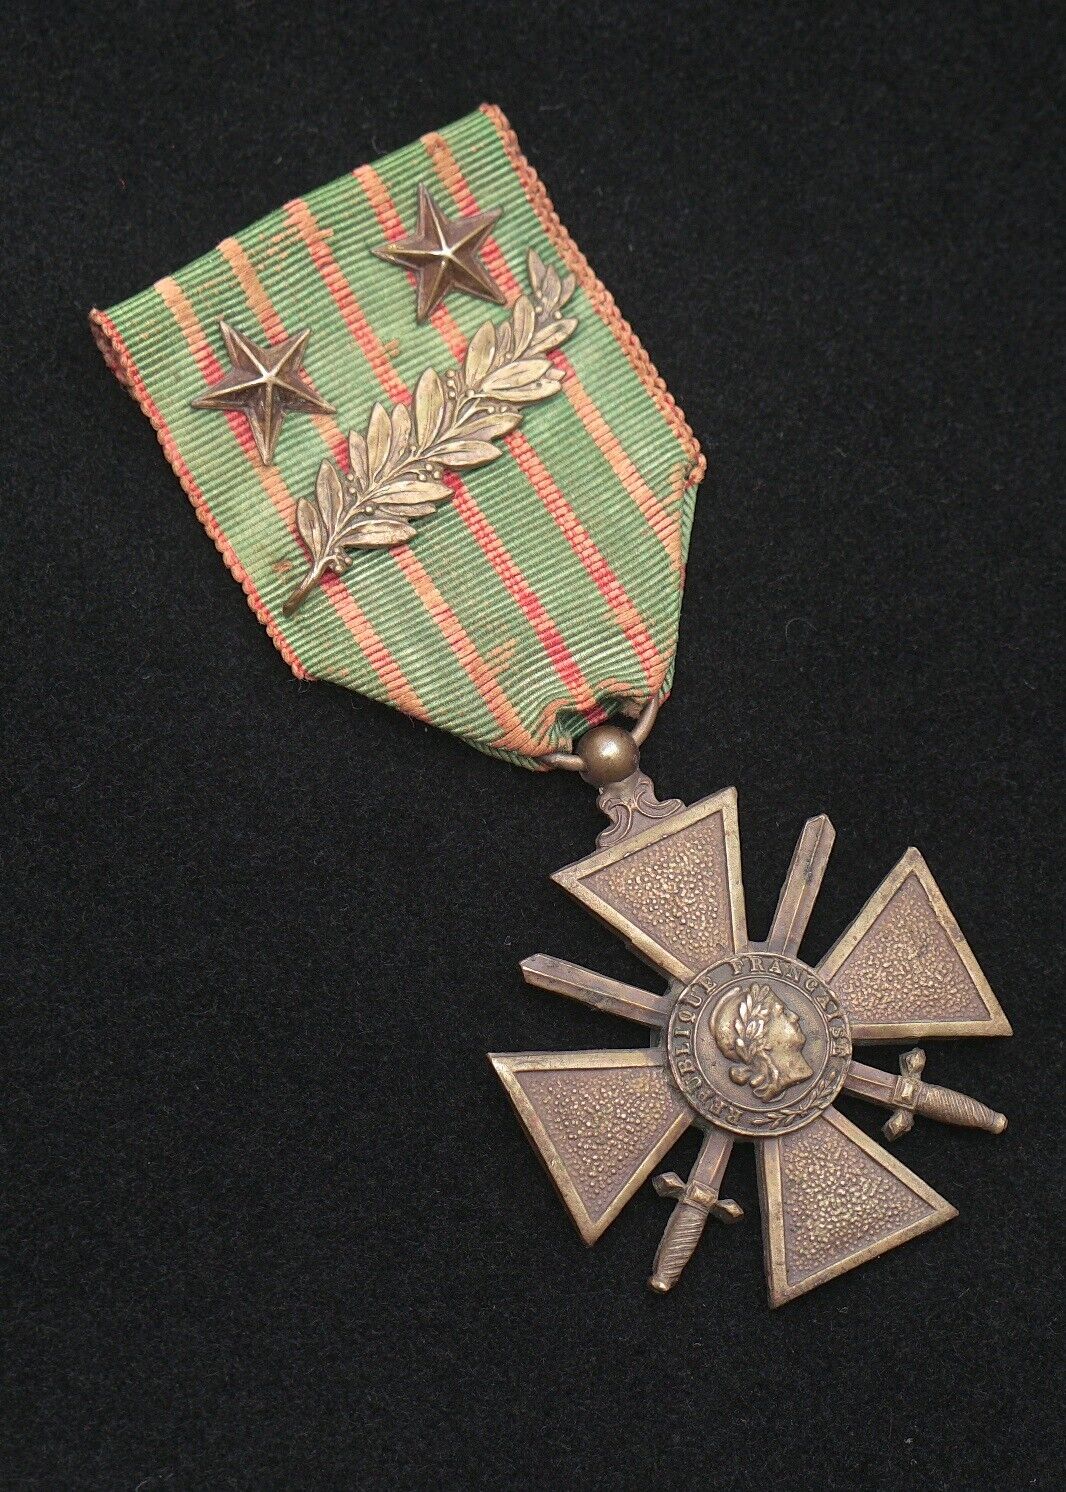 WWI 1918 French Croix de Guerre with Palm Citation & Two Bronze Star Citations